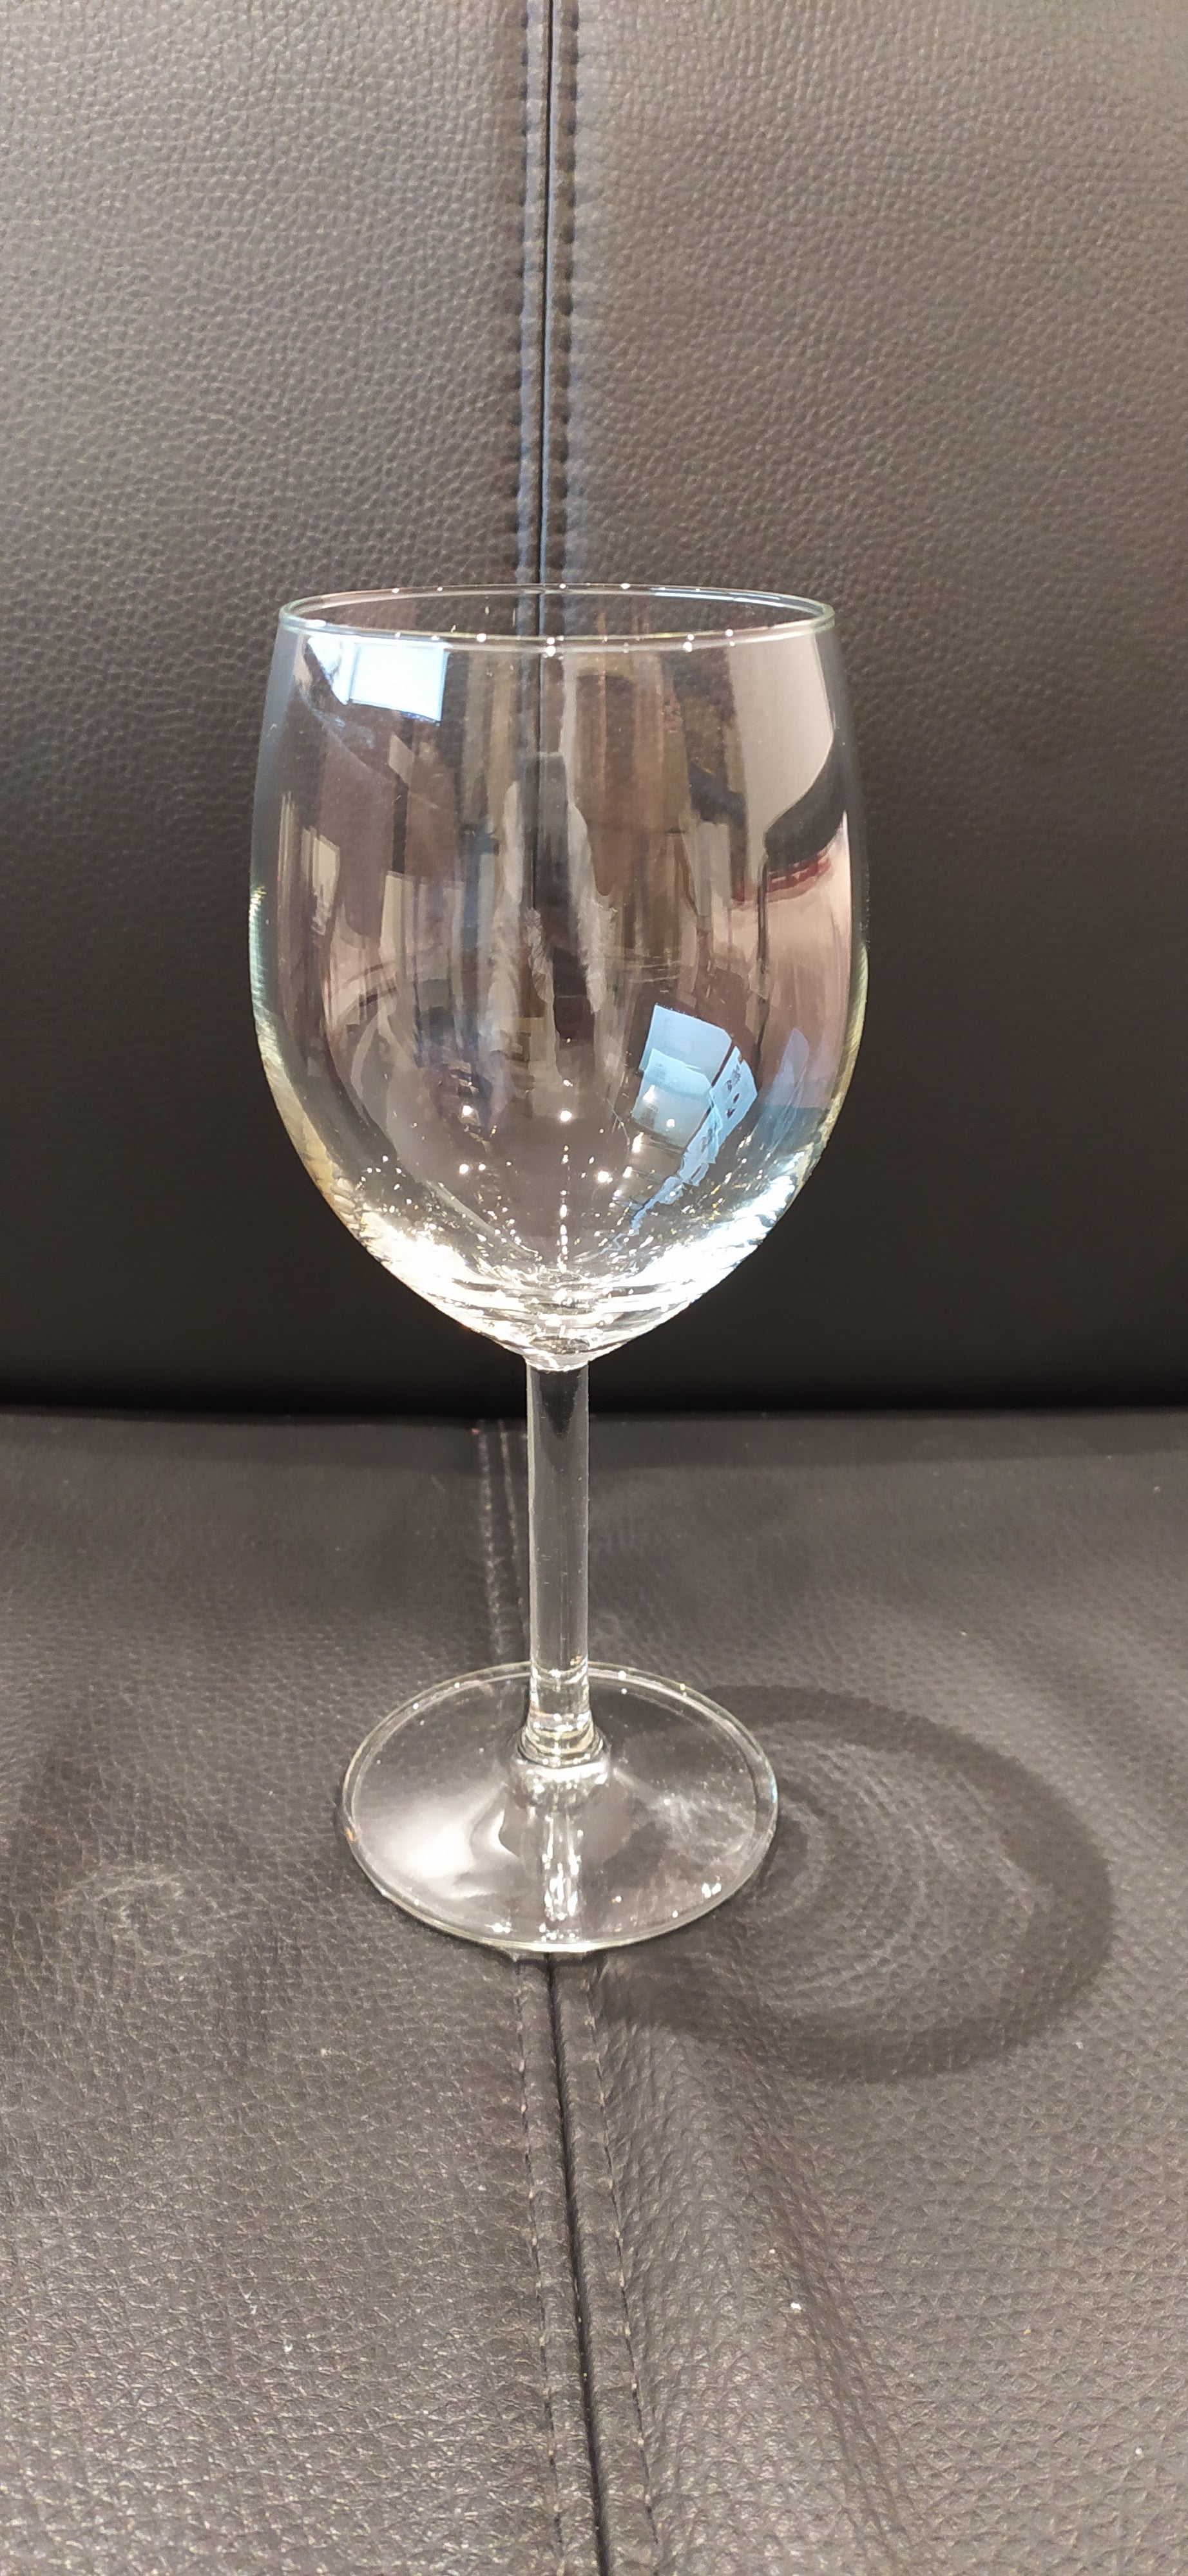 SVALKA Wine glass, clear glass, 20 oz - IKEA